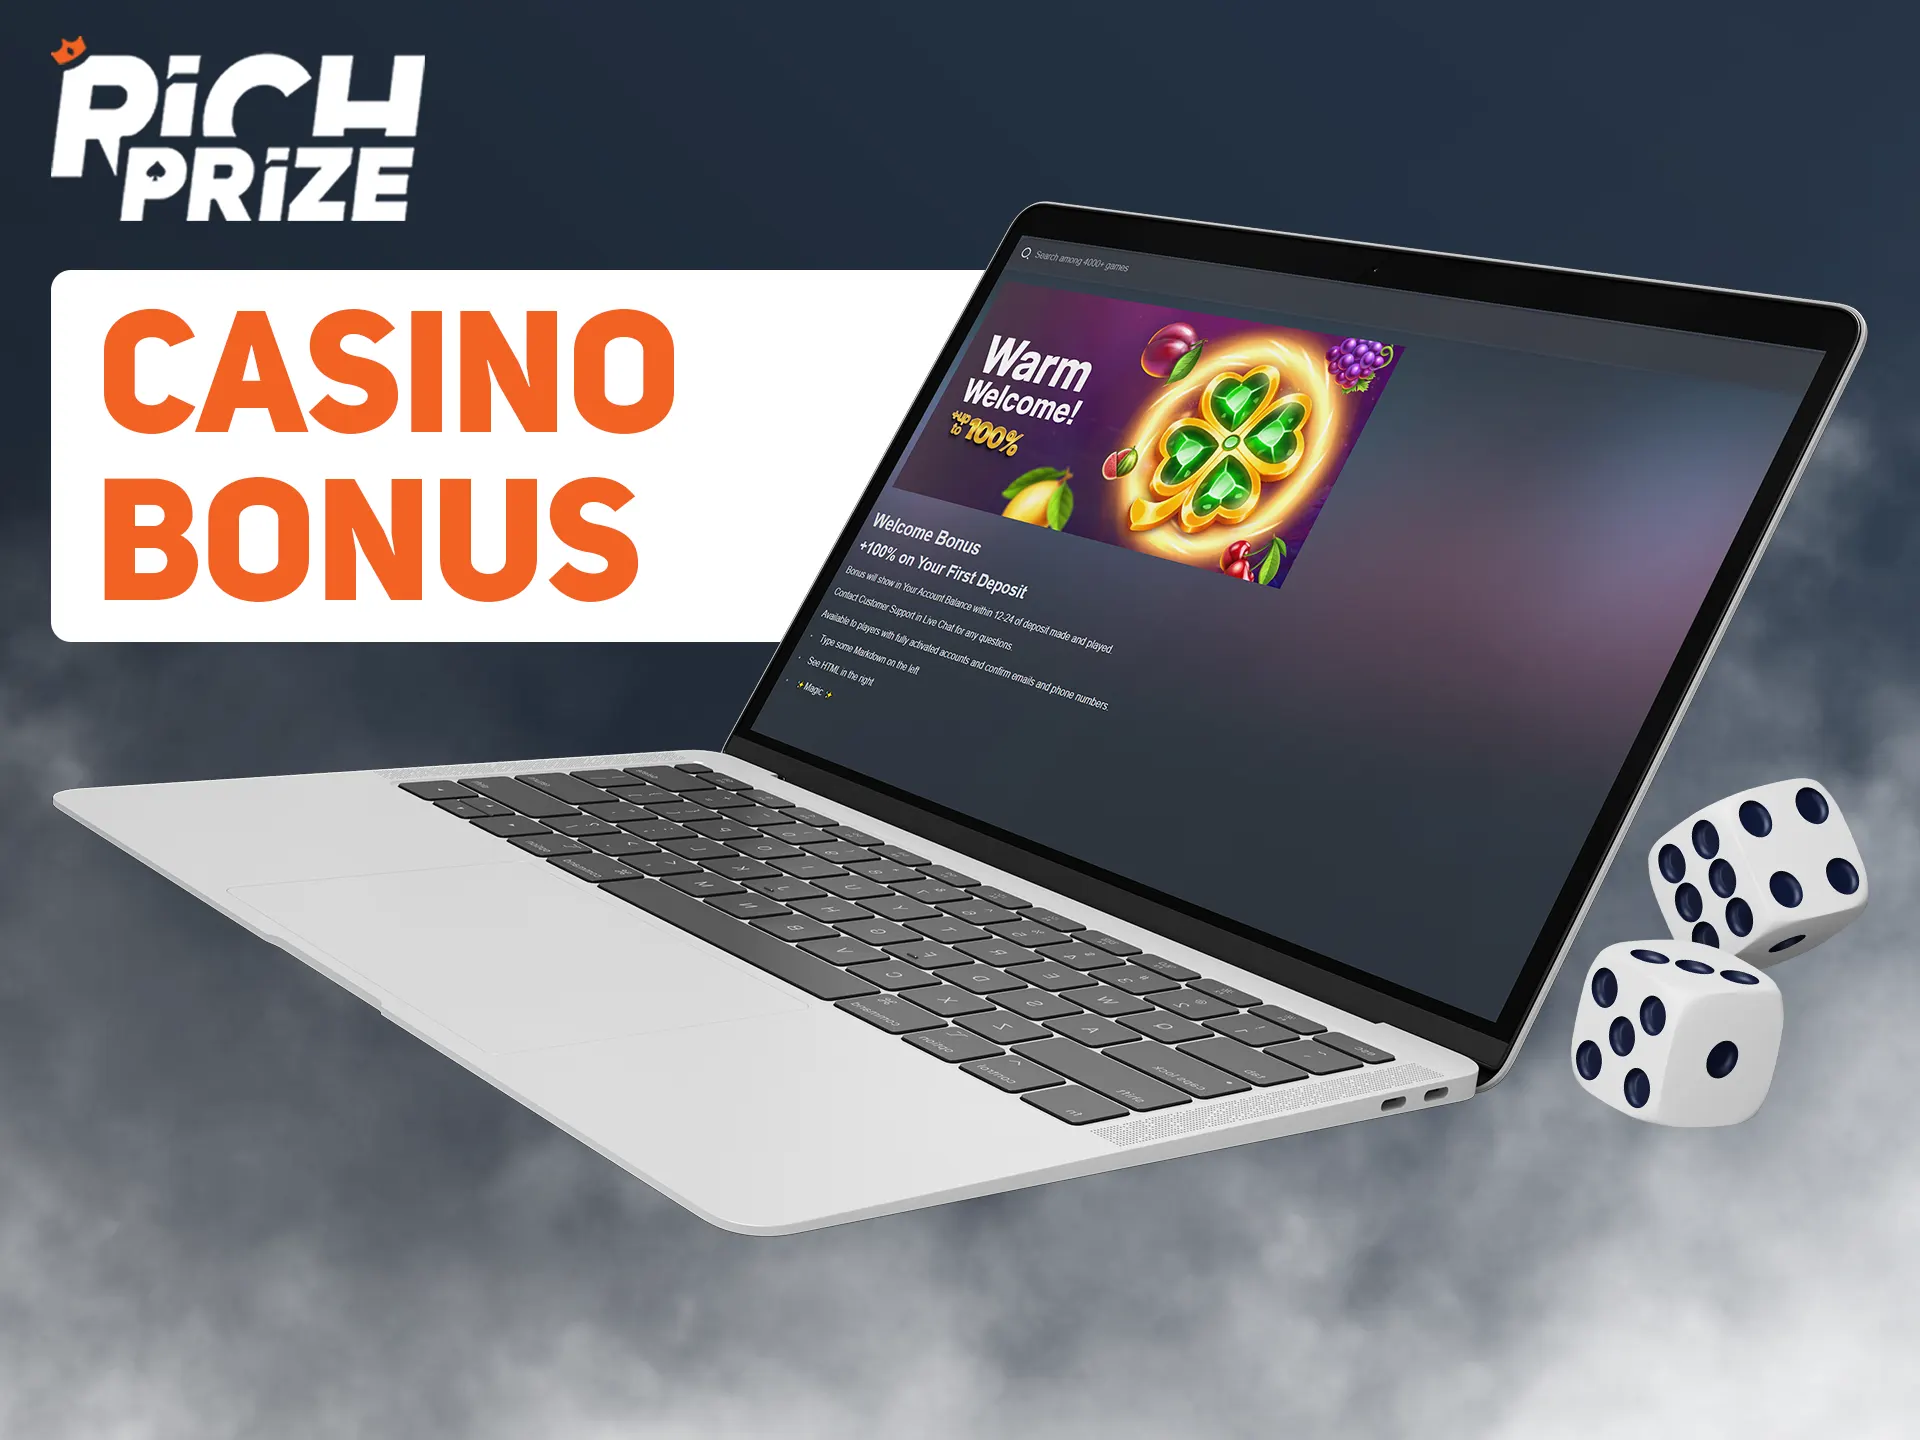 Get Richprize casino bonus after playing games.